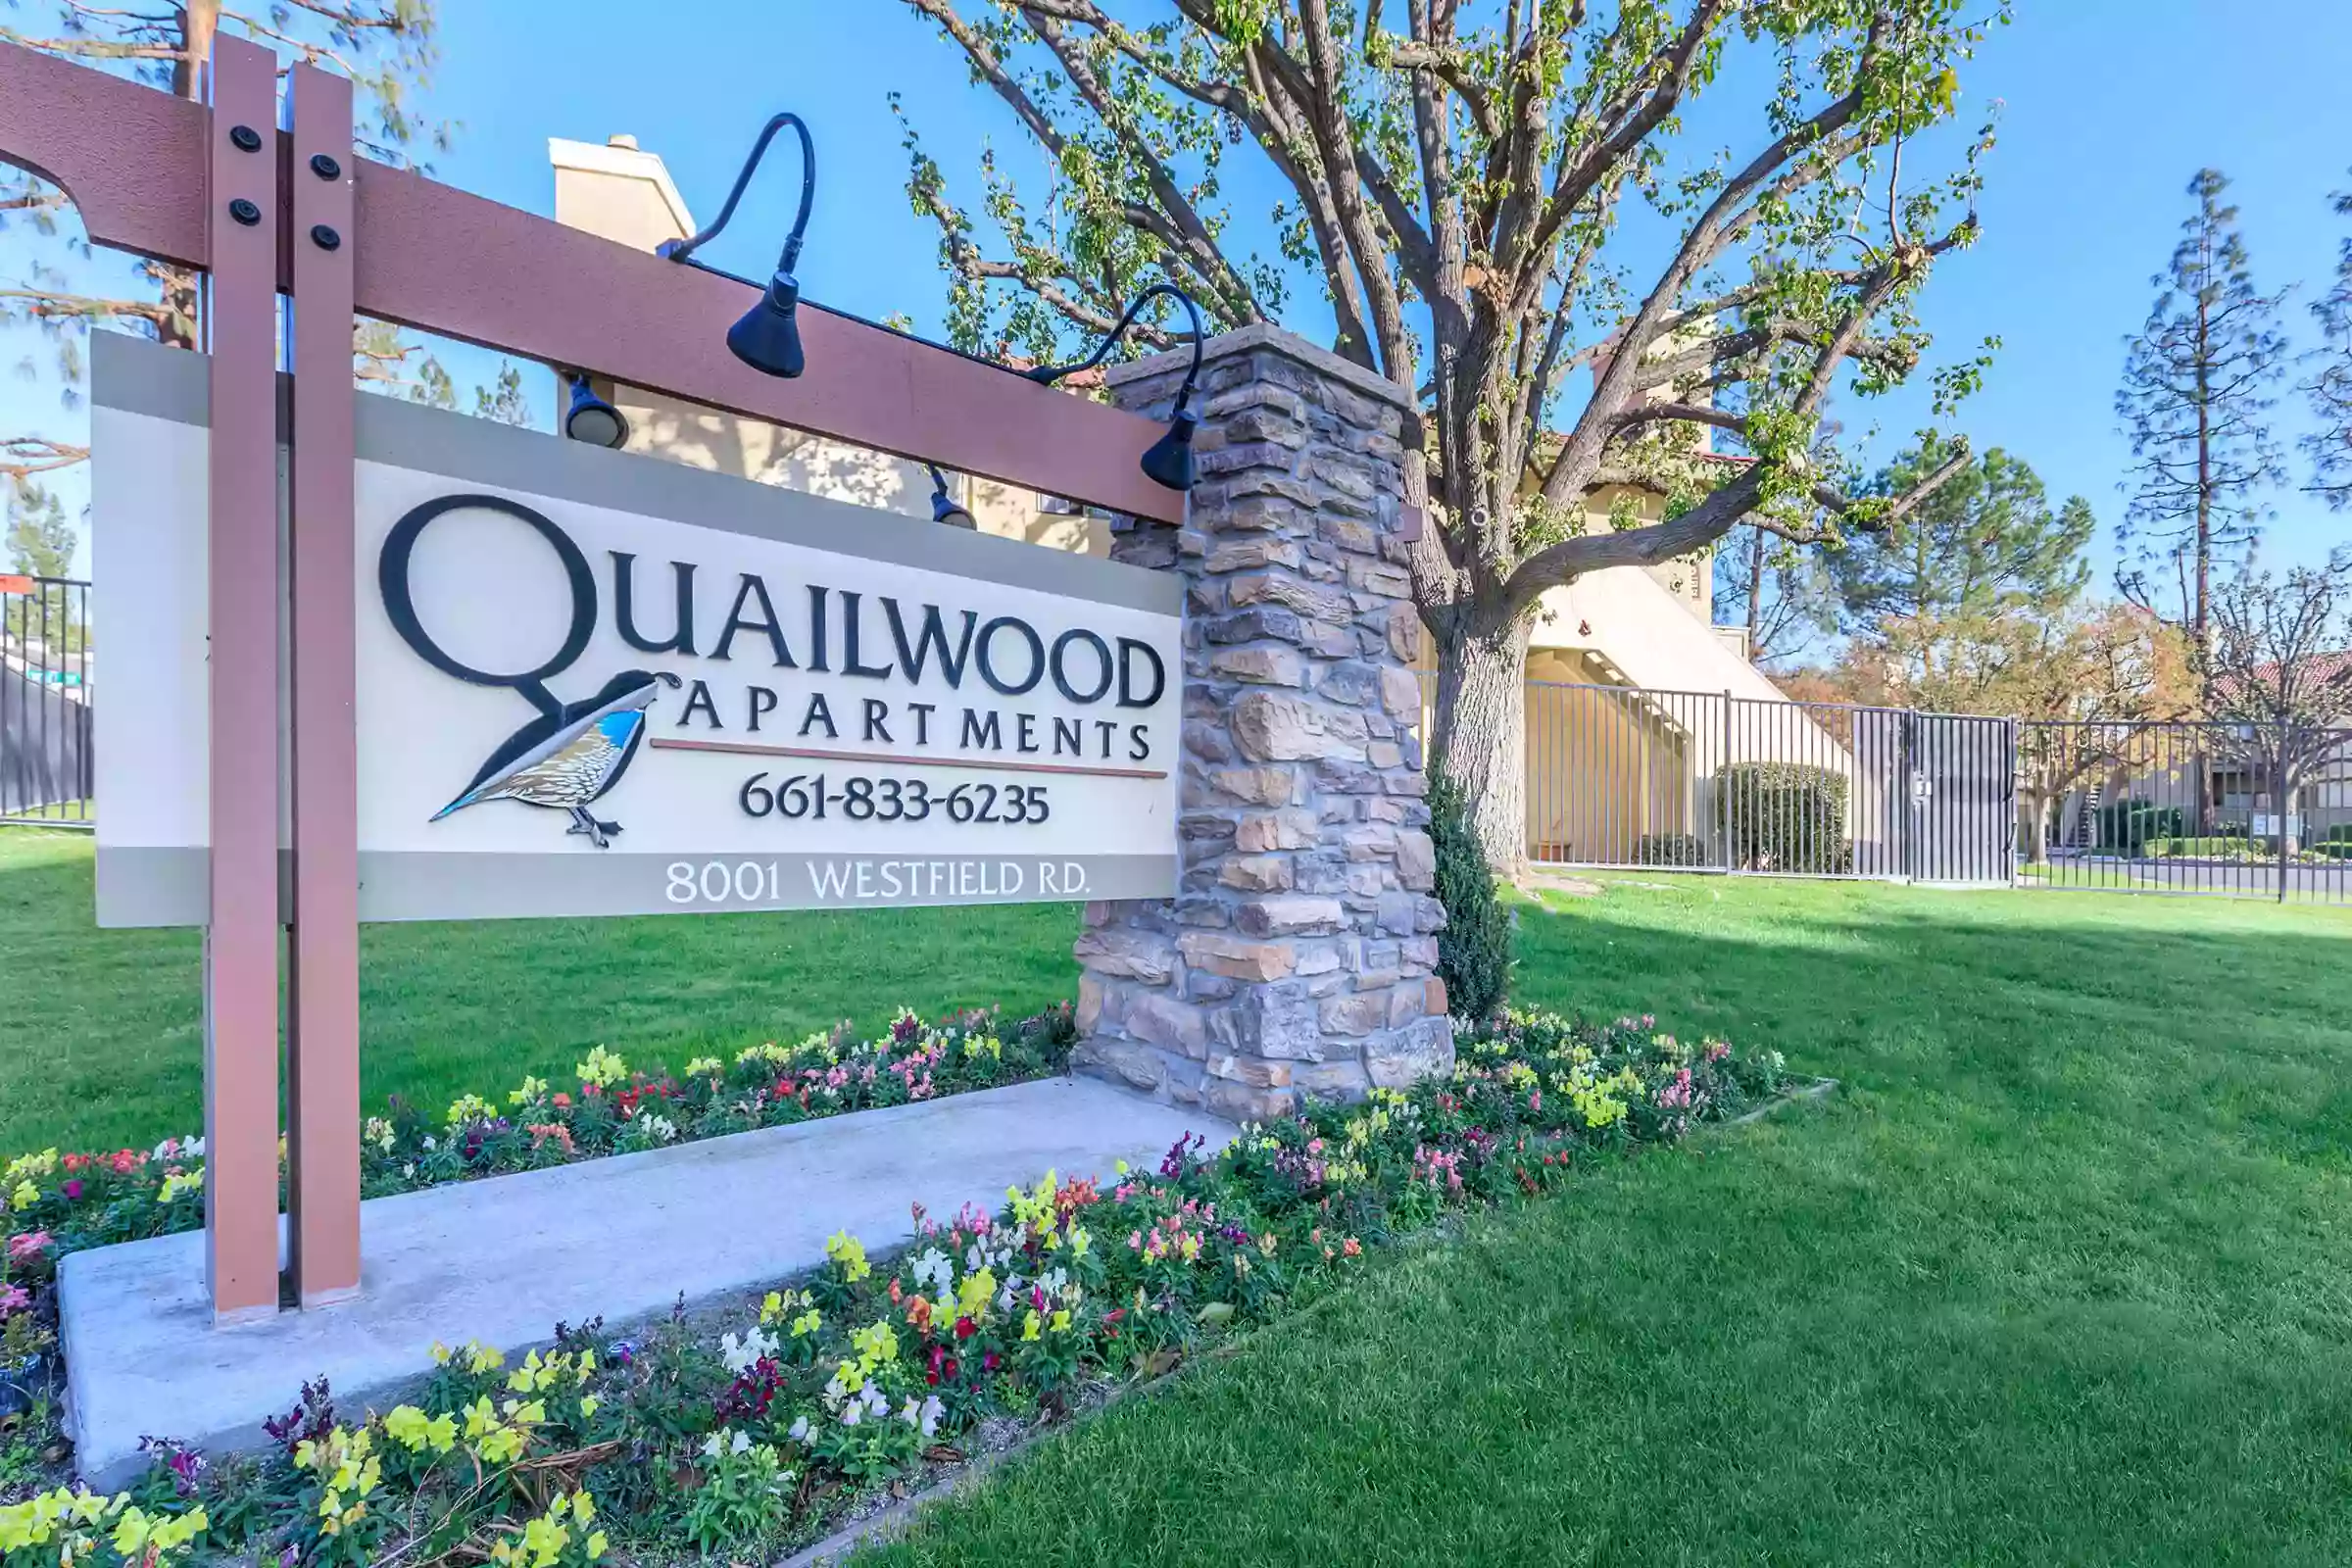 Quailwood Apartments